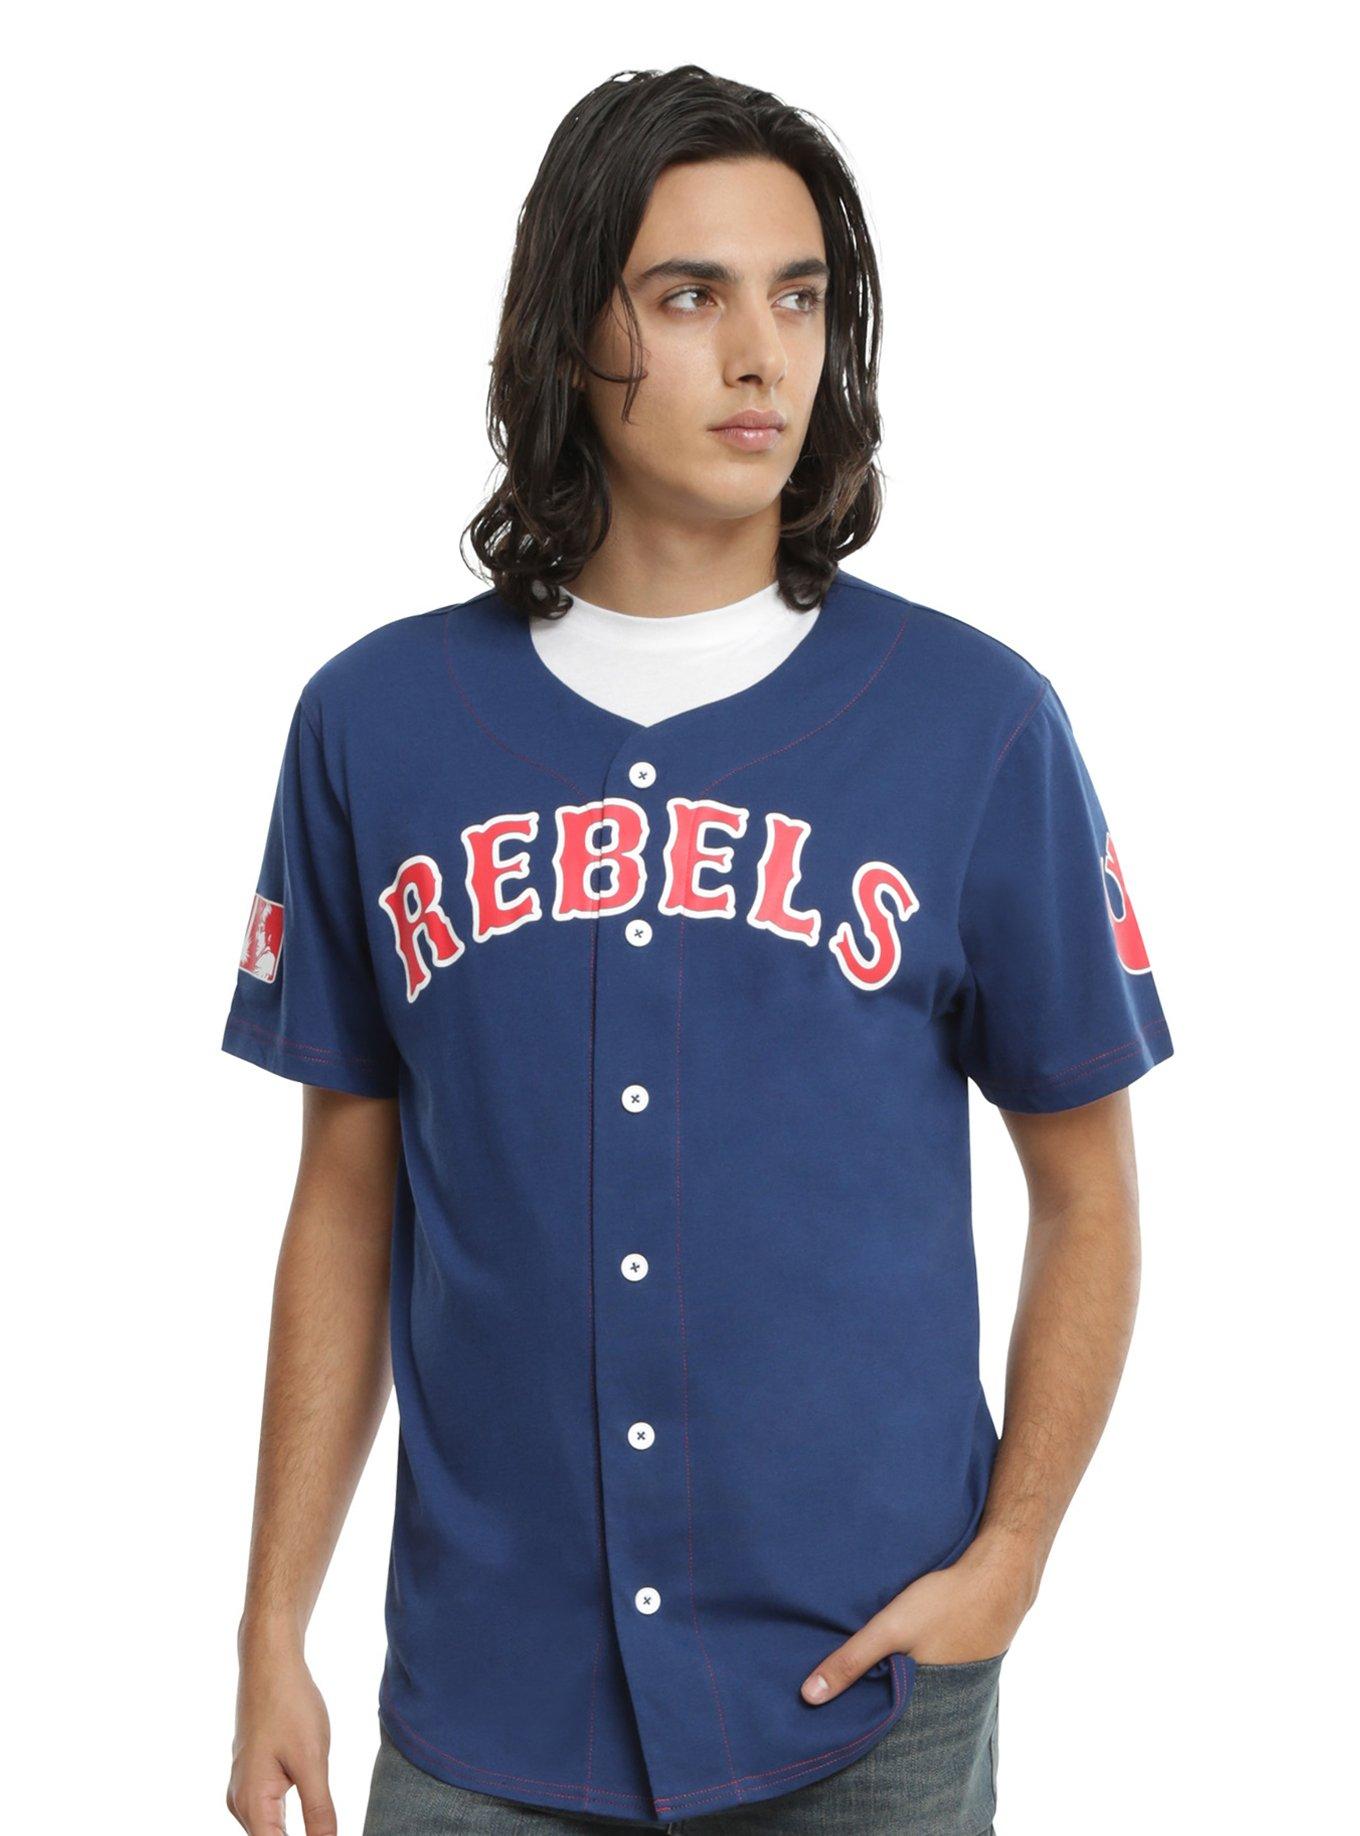 Star Wars Rebel Baseball Jersey